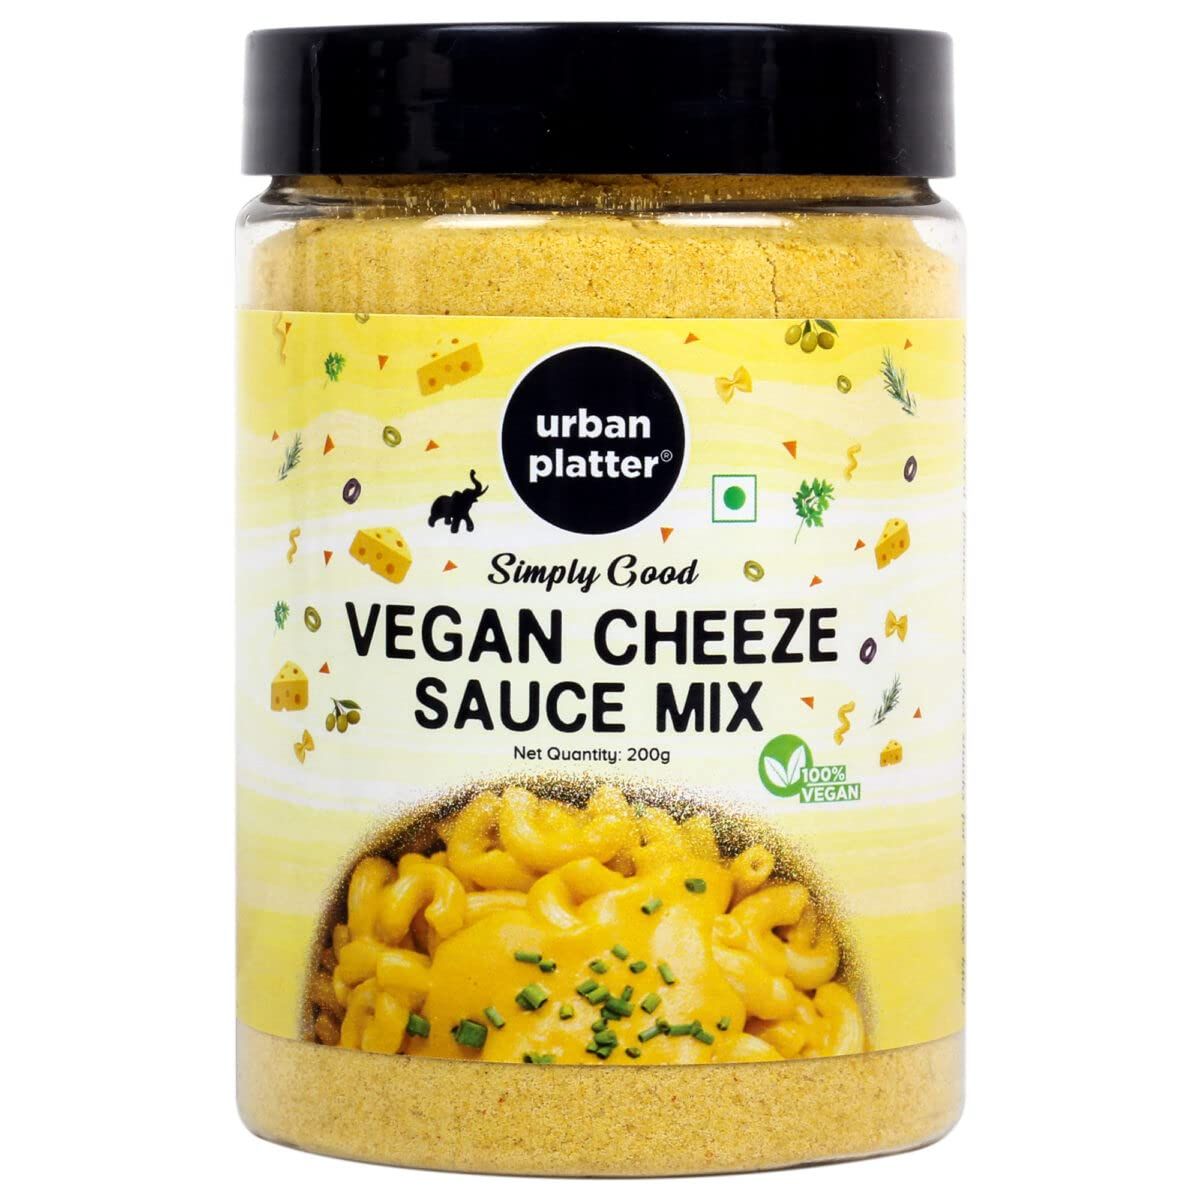 Urban Platter Vegan Cheese Sauce Mix Image